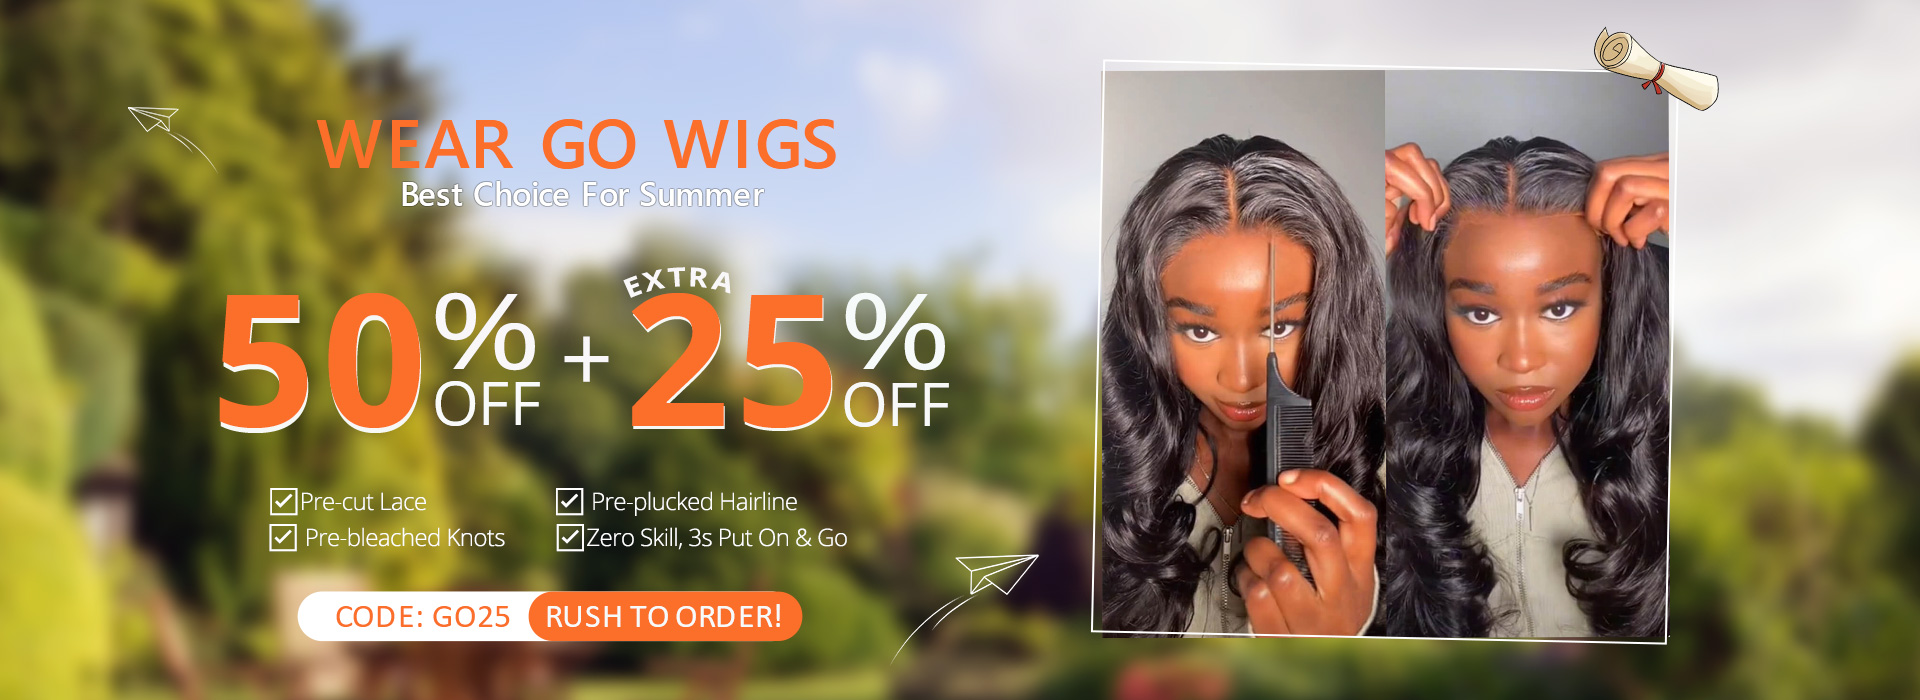 celie lace wig wear go wigs sale pc